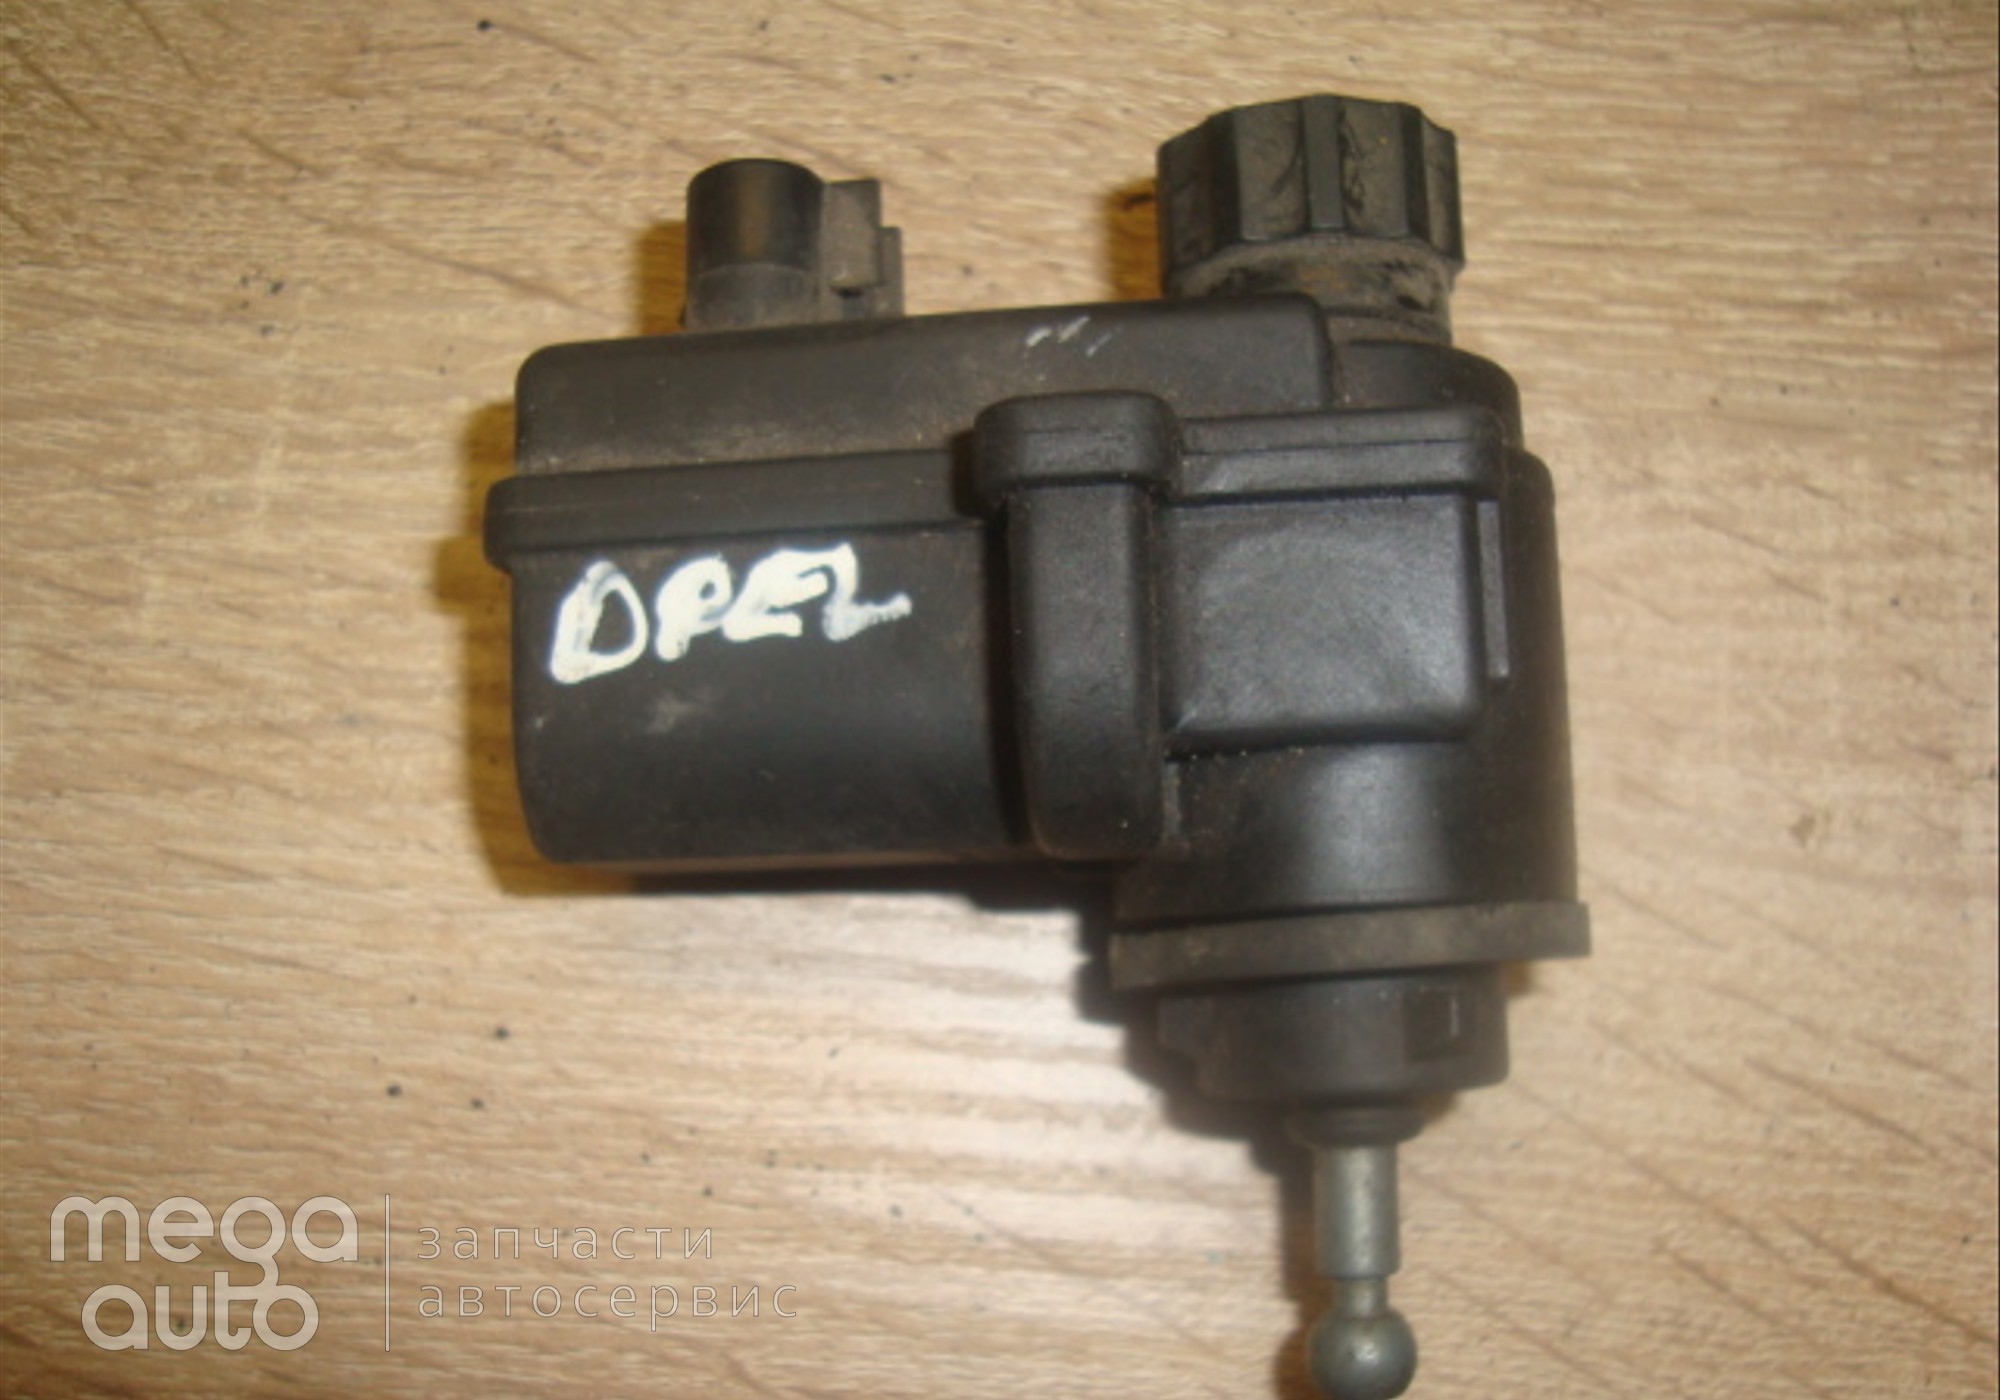 90413185 Моторчик корректора фары опель для Opel Vita